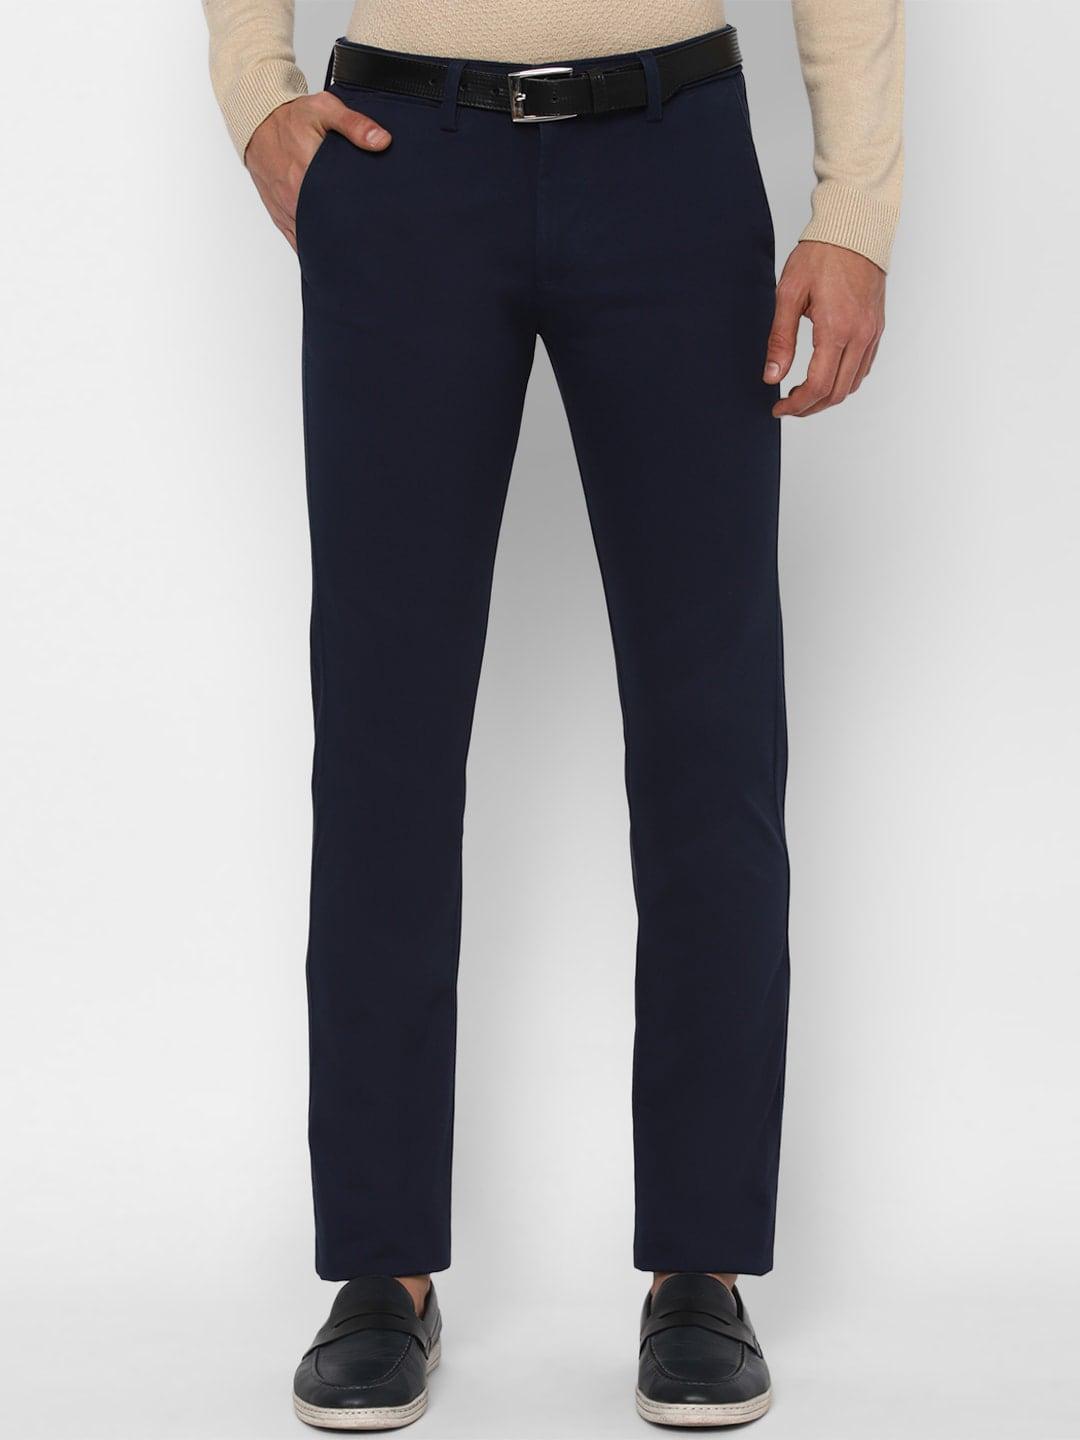 allen-solly-men-navy-blue-slim-fit-trousers